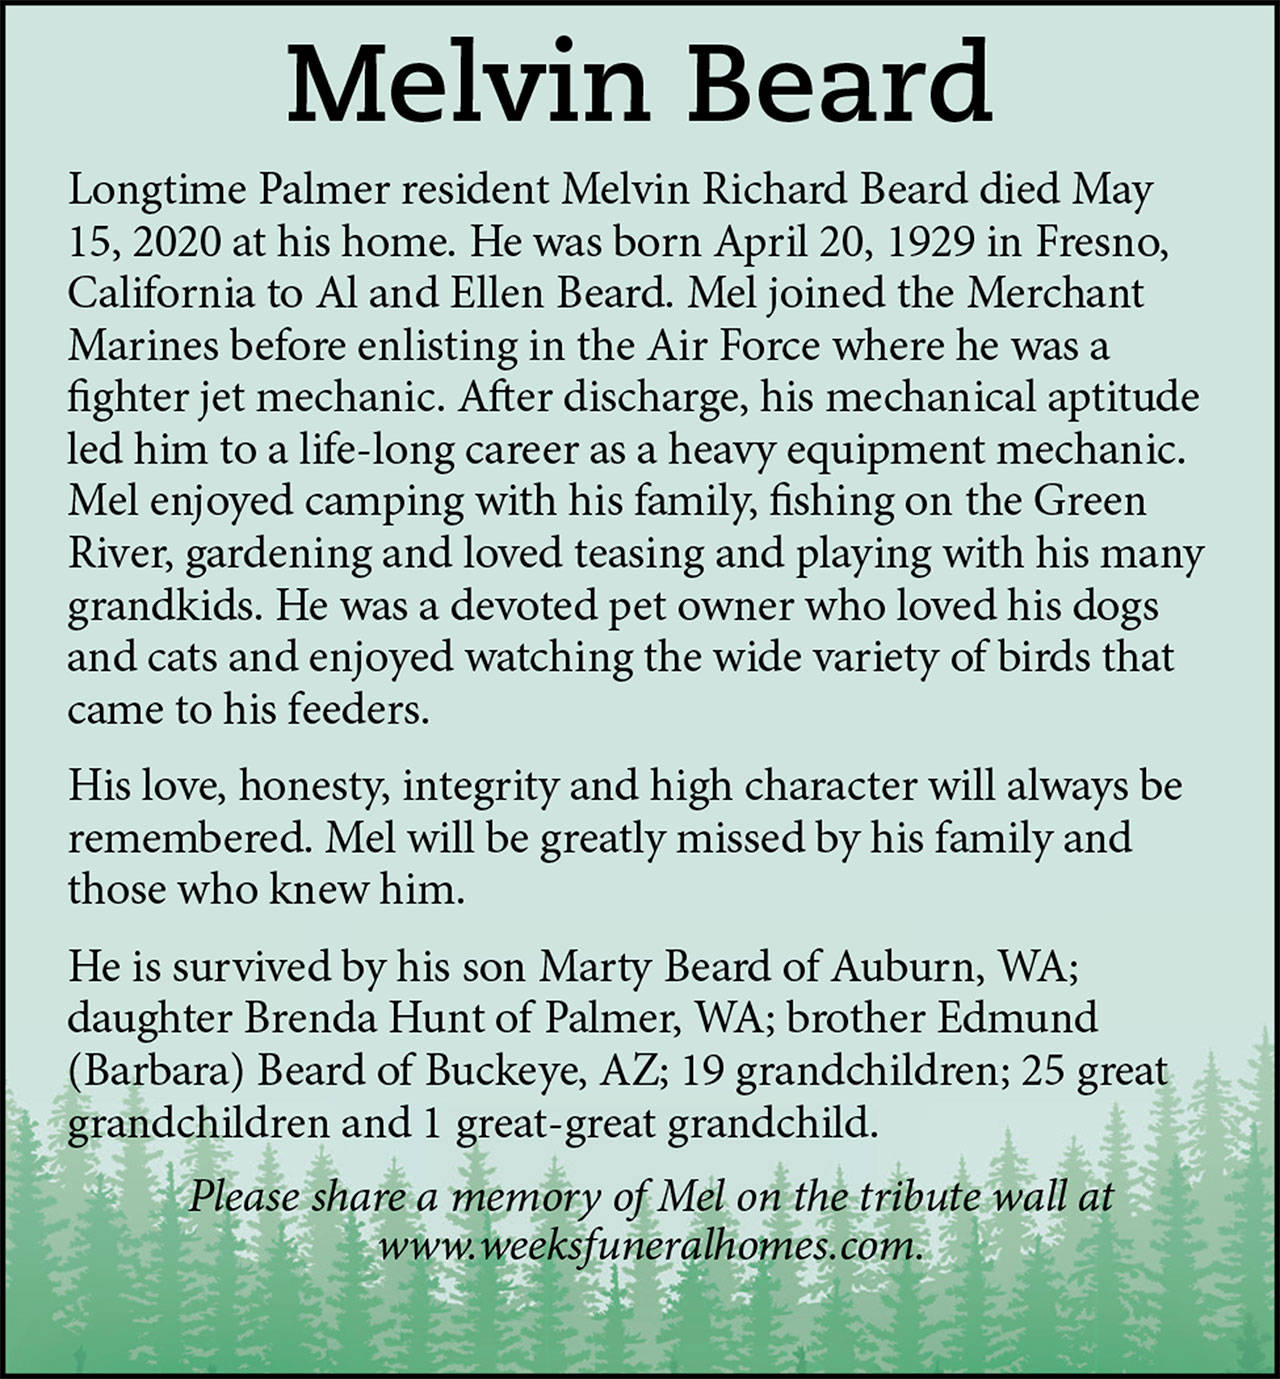 Melvin Beard